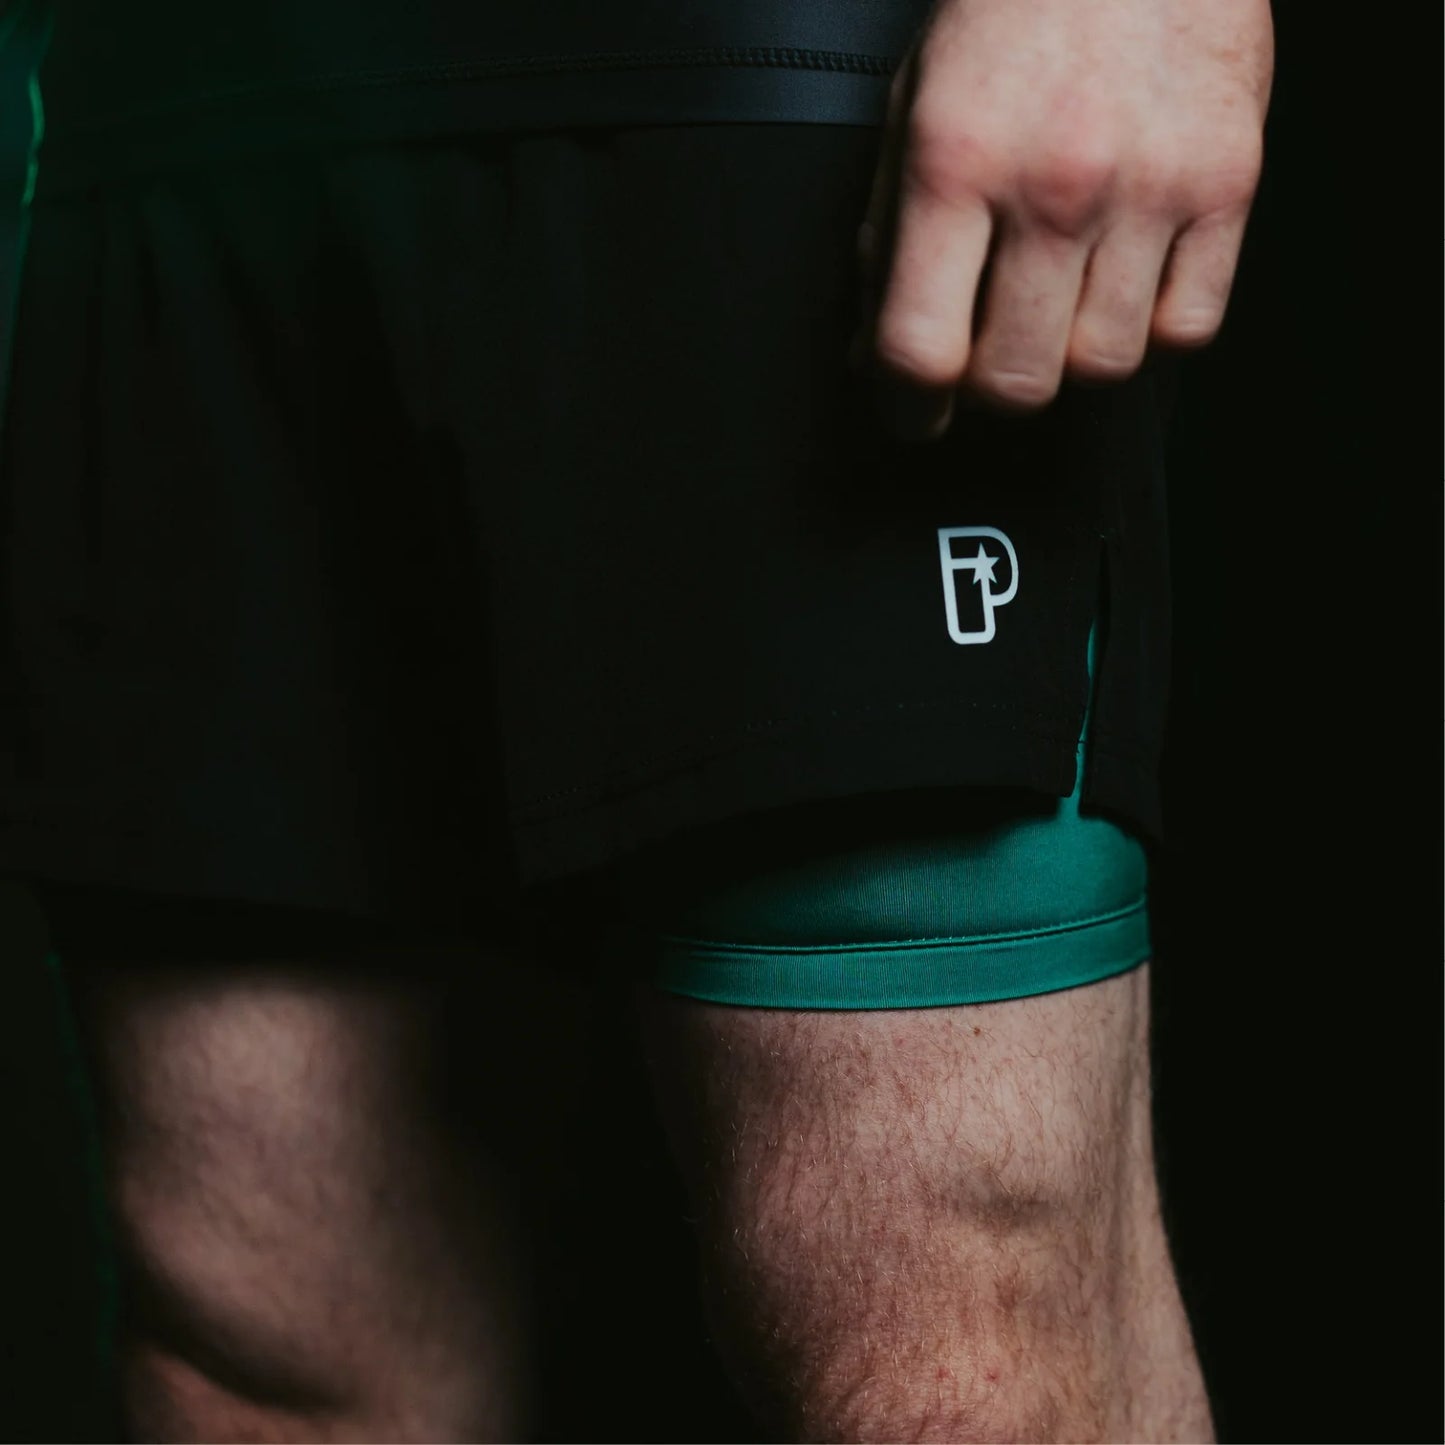 Progress Bengal Hybrid Shorts - Grün